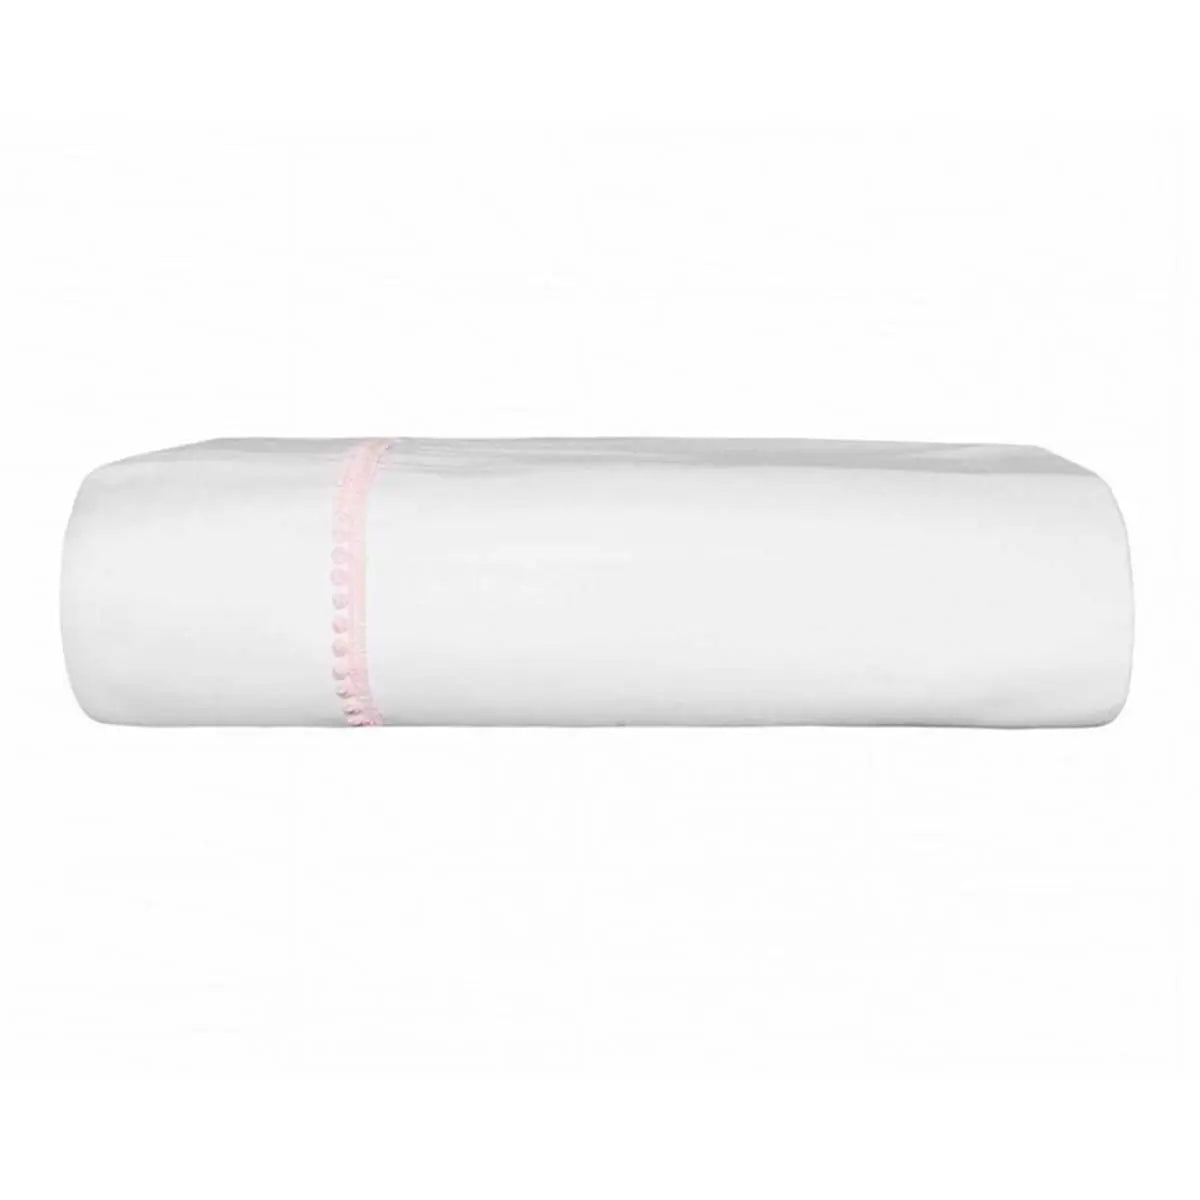 Bovi Bitsy Dots Sheet Set in White/Light Pink 